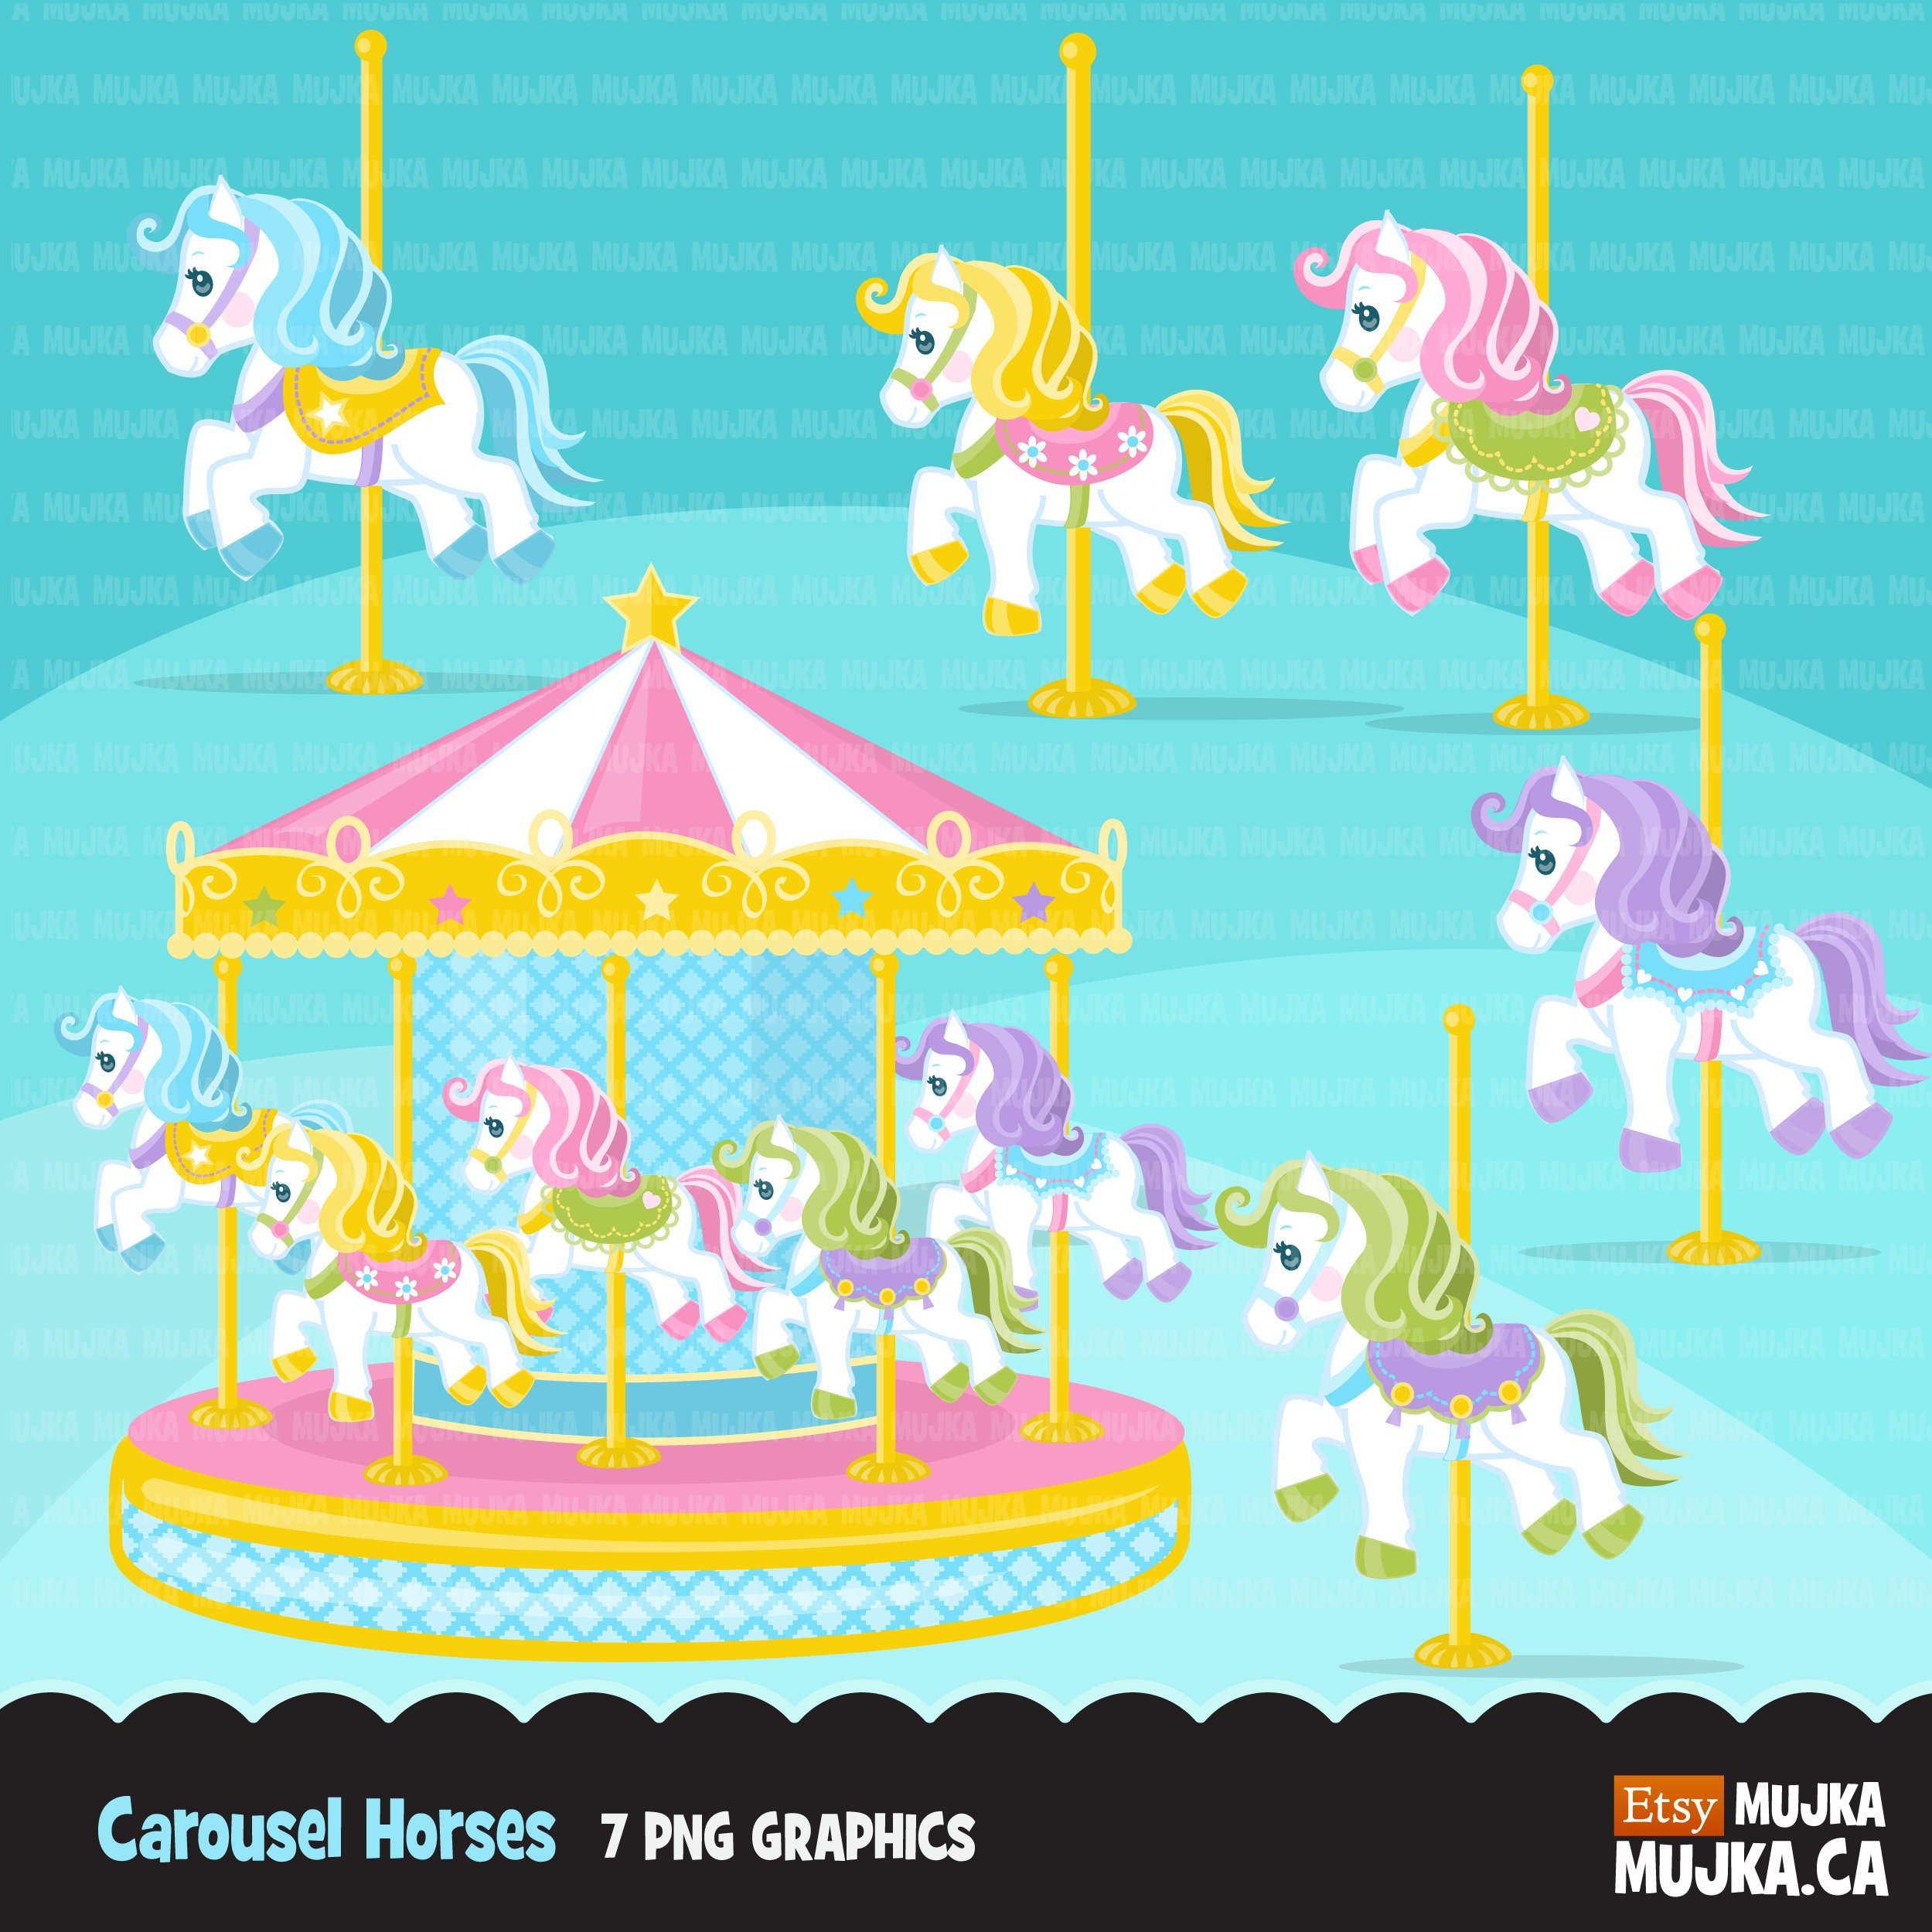 fair clipart carnival horse